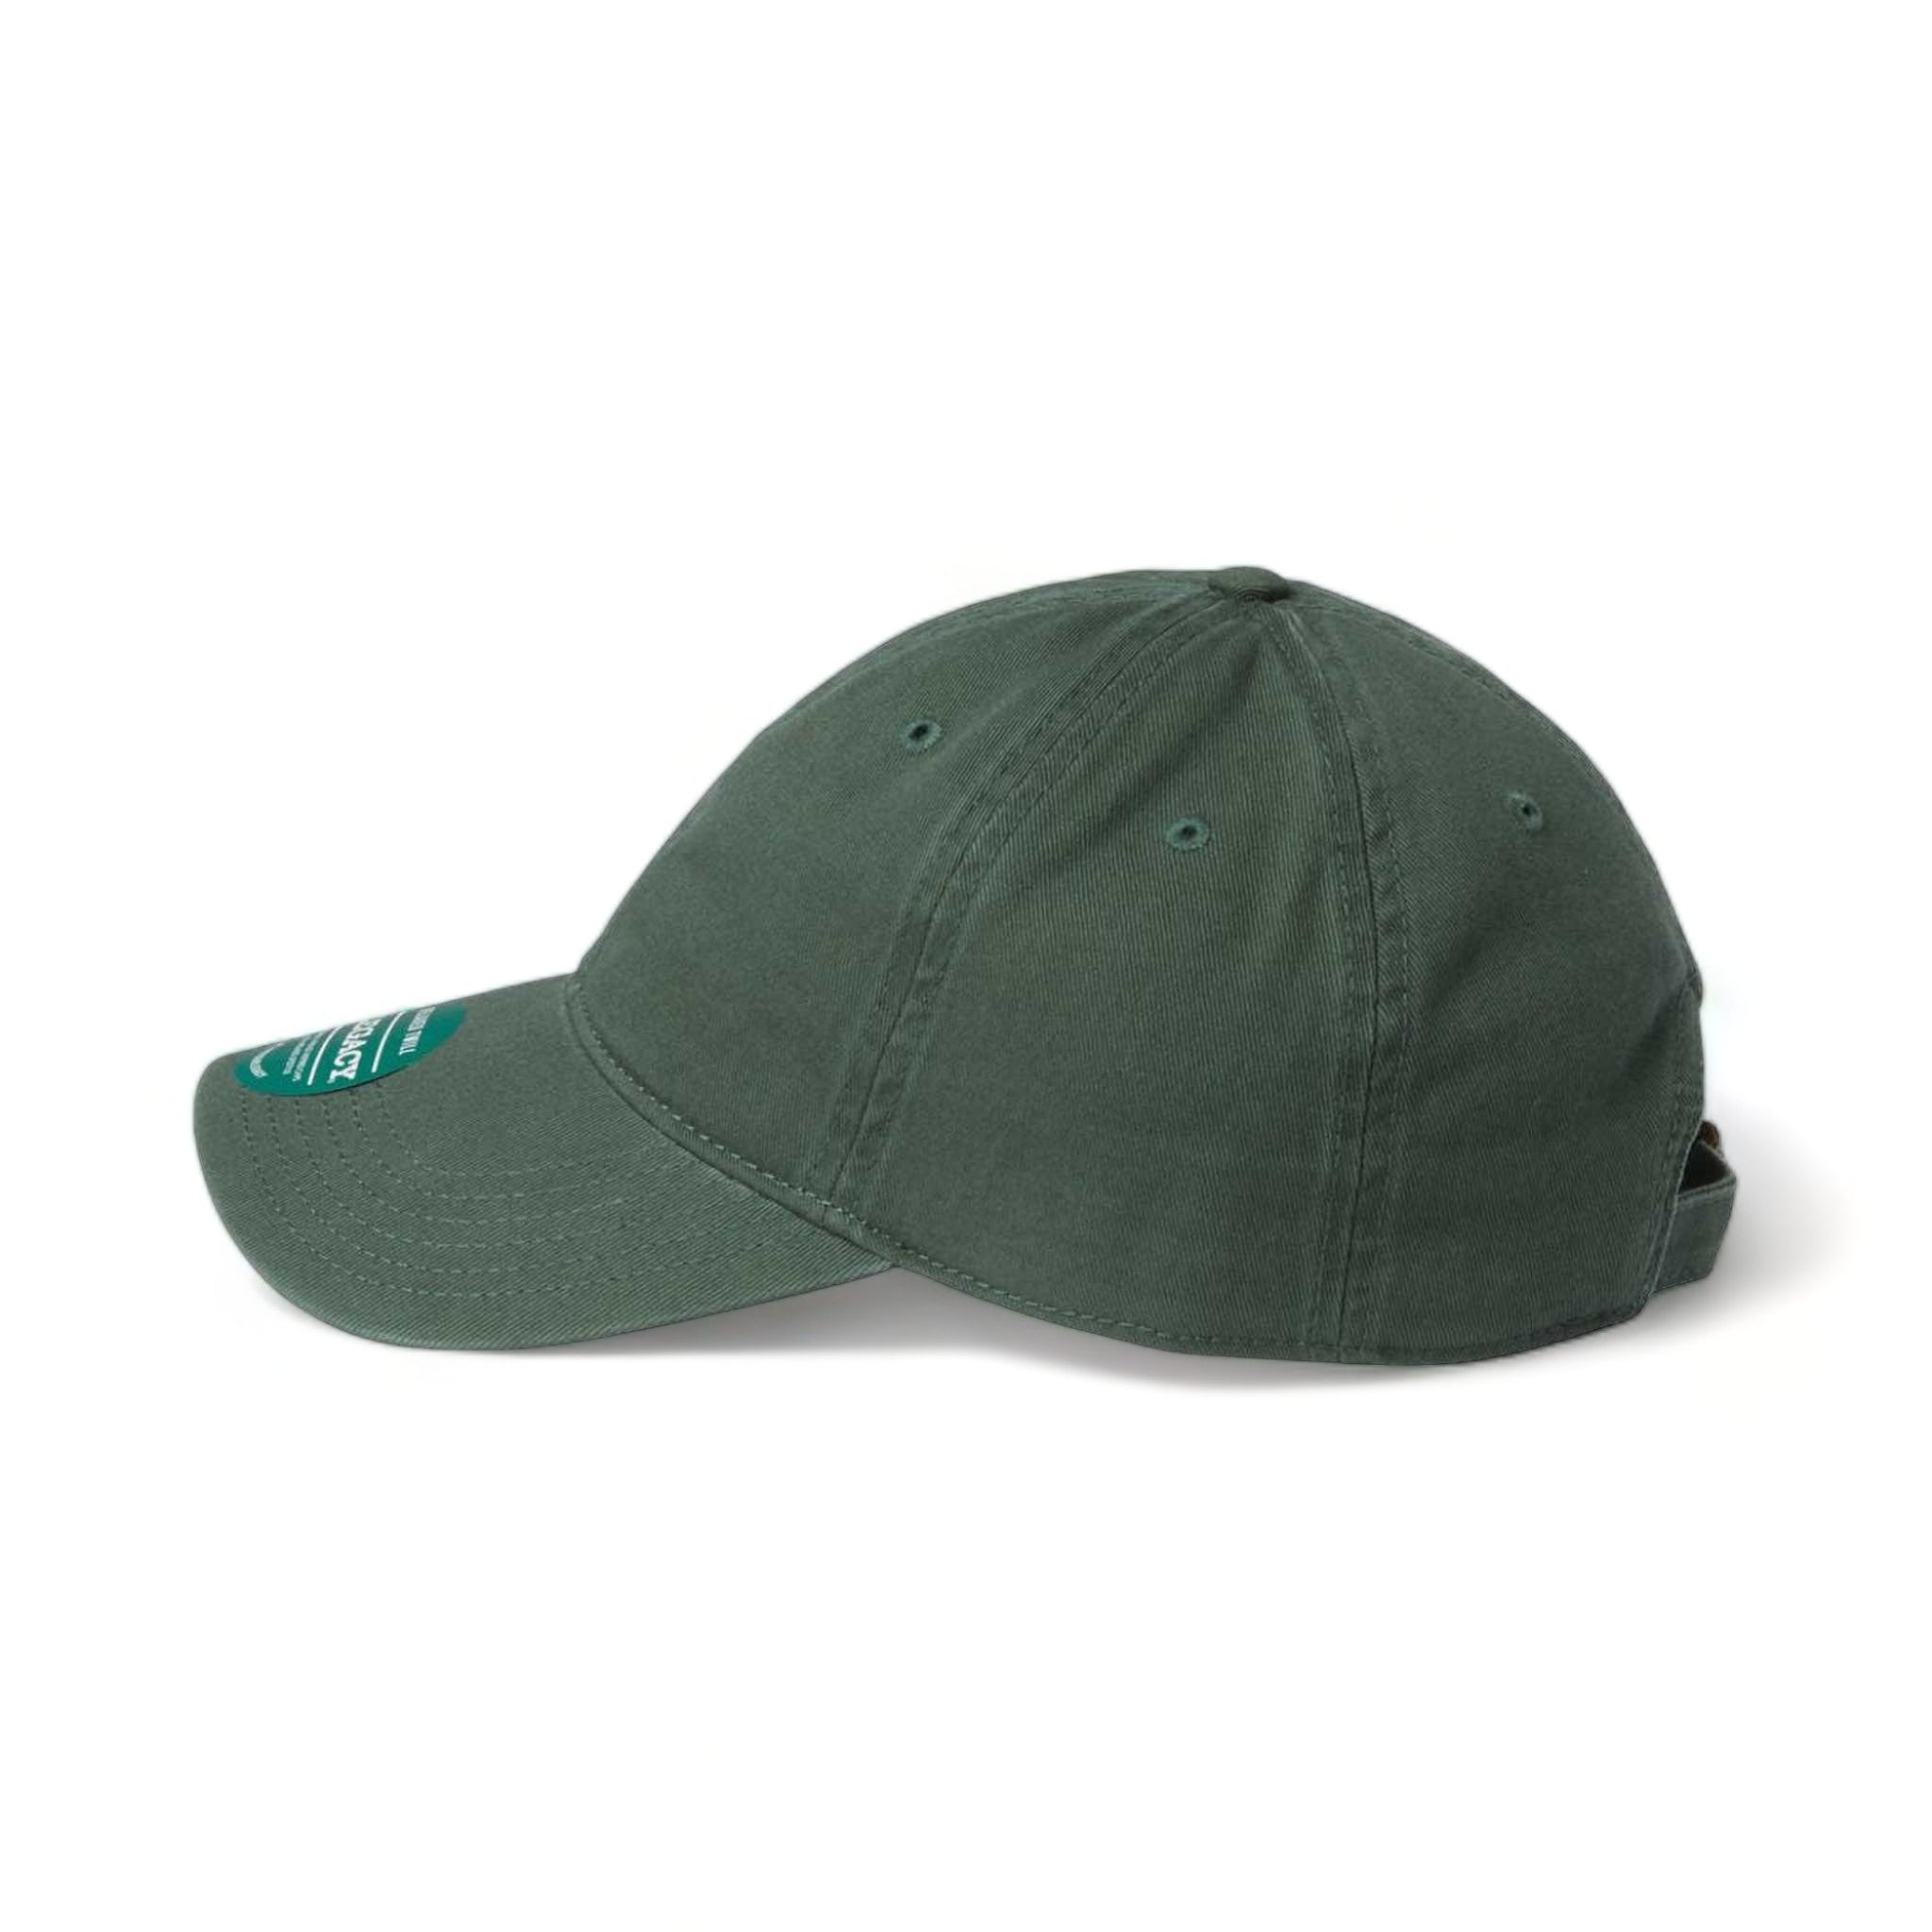 Side view of LEGACY EZA custom hat in dark green